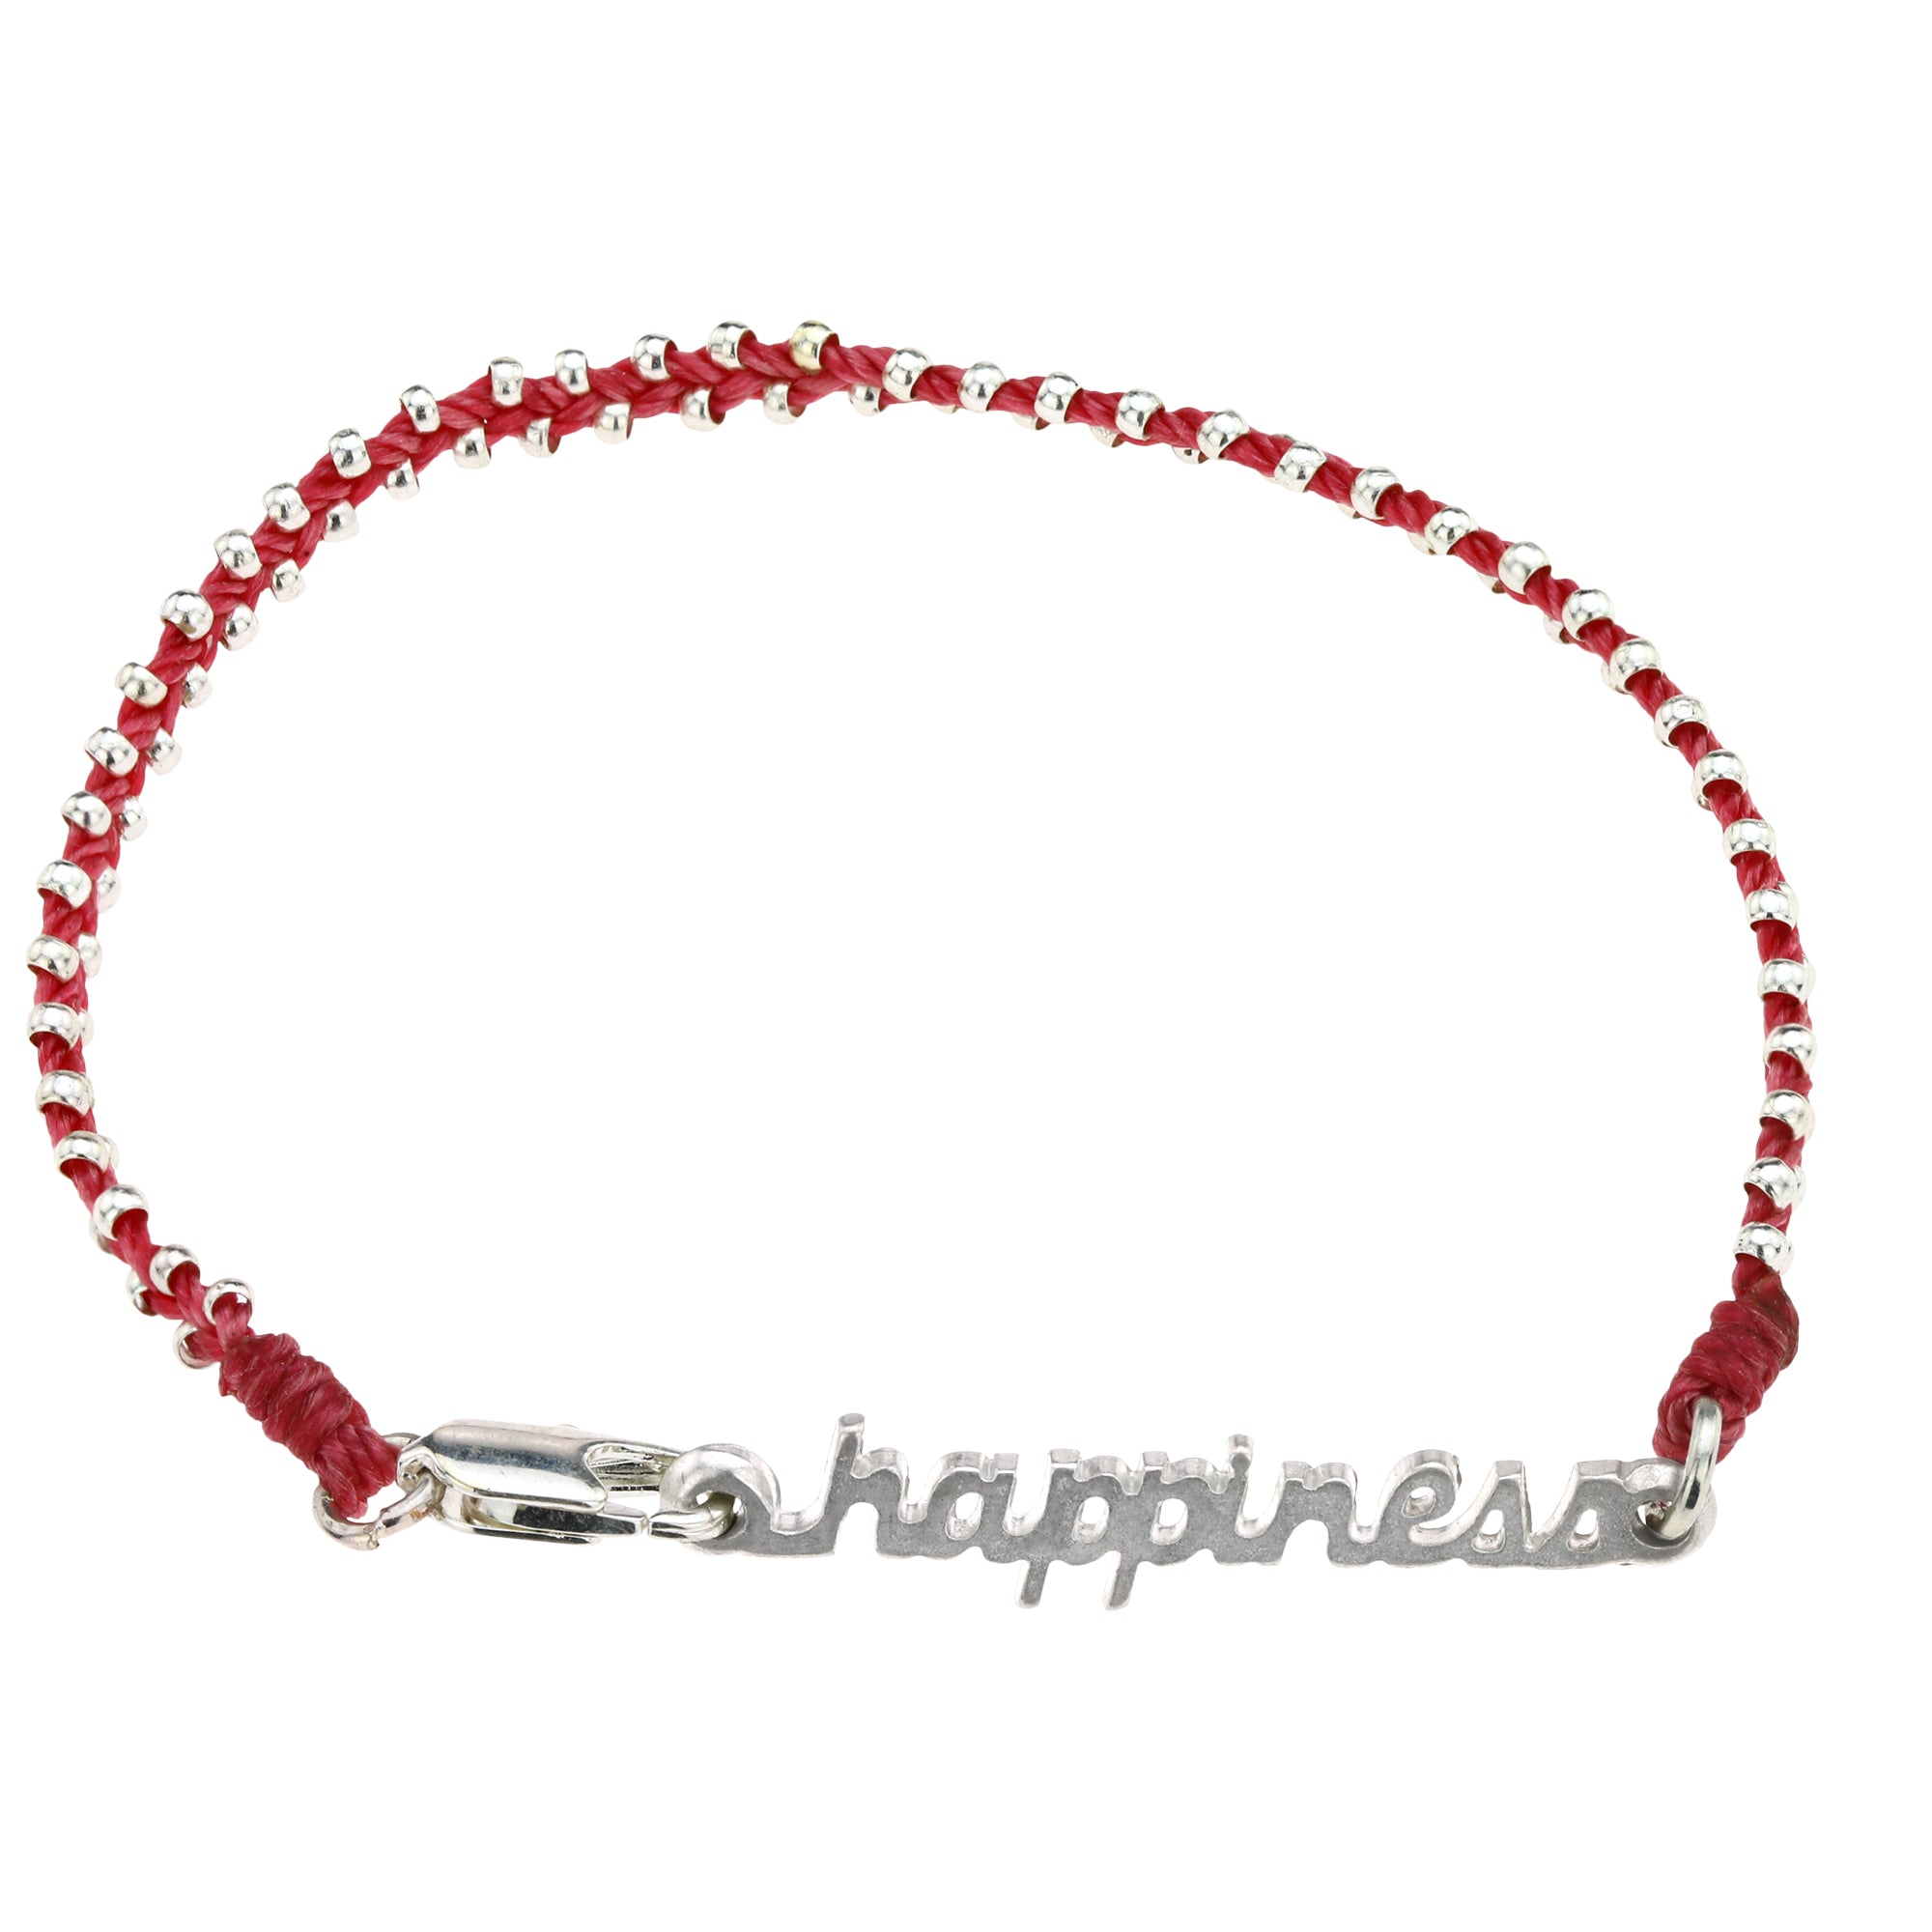 Infinite Inspiration Statement Bracelet - Happiness